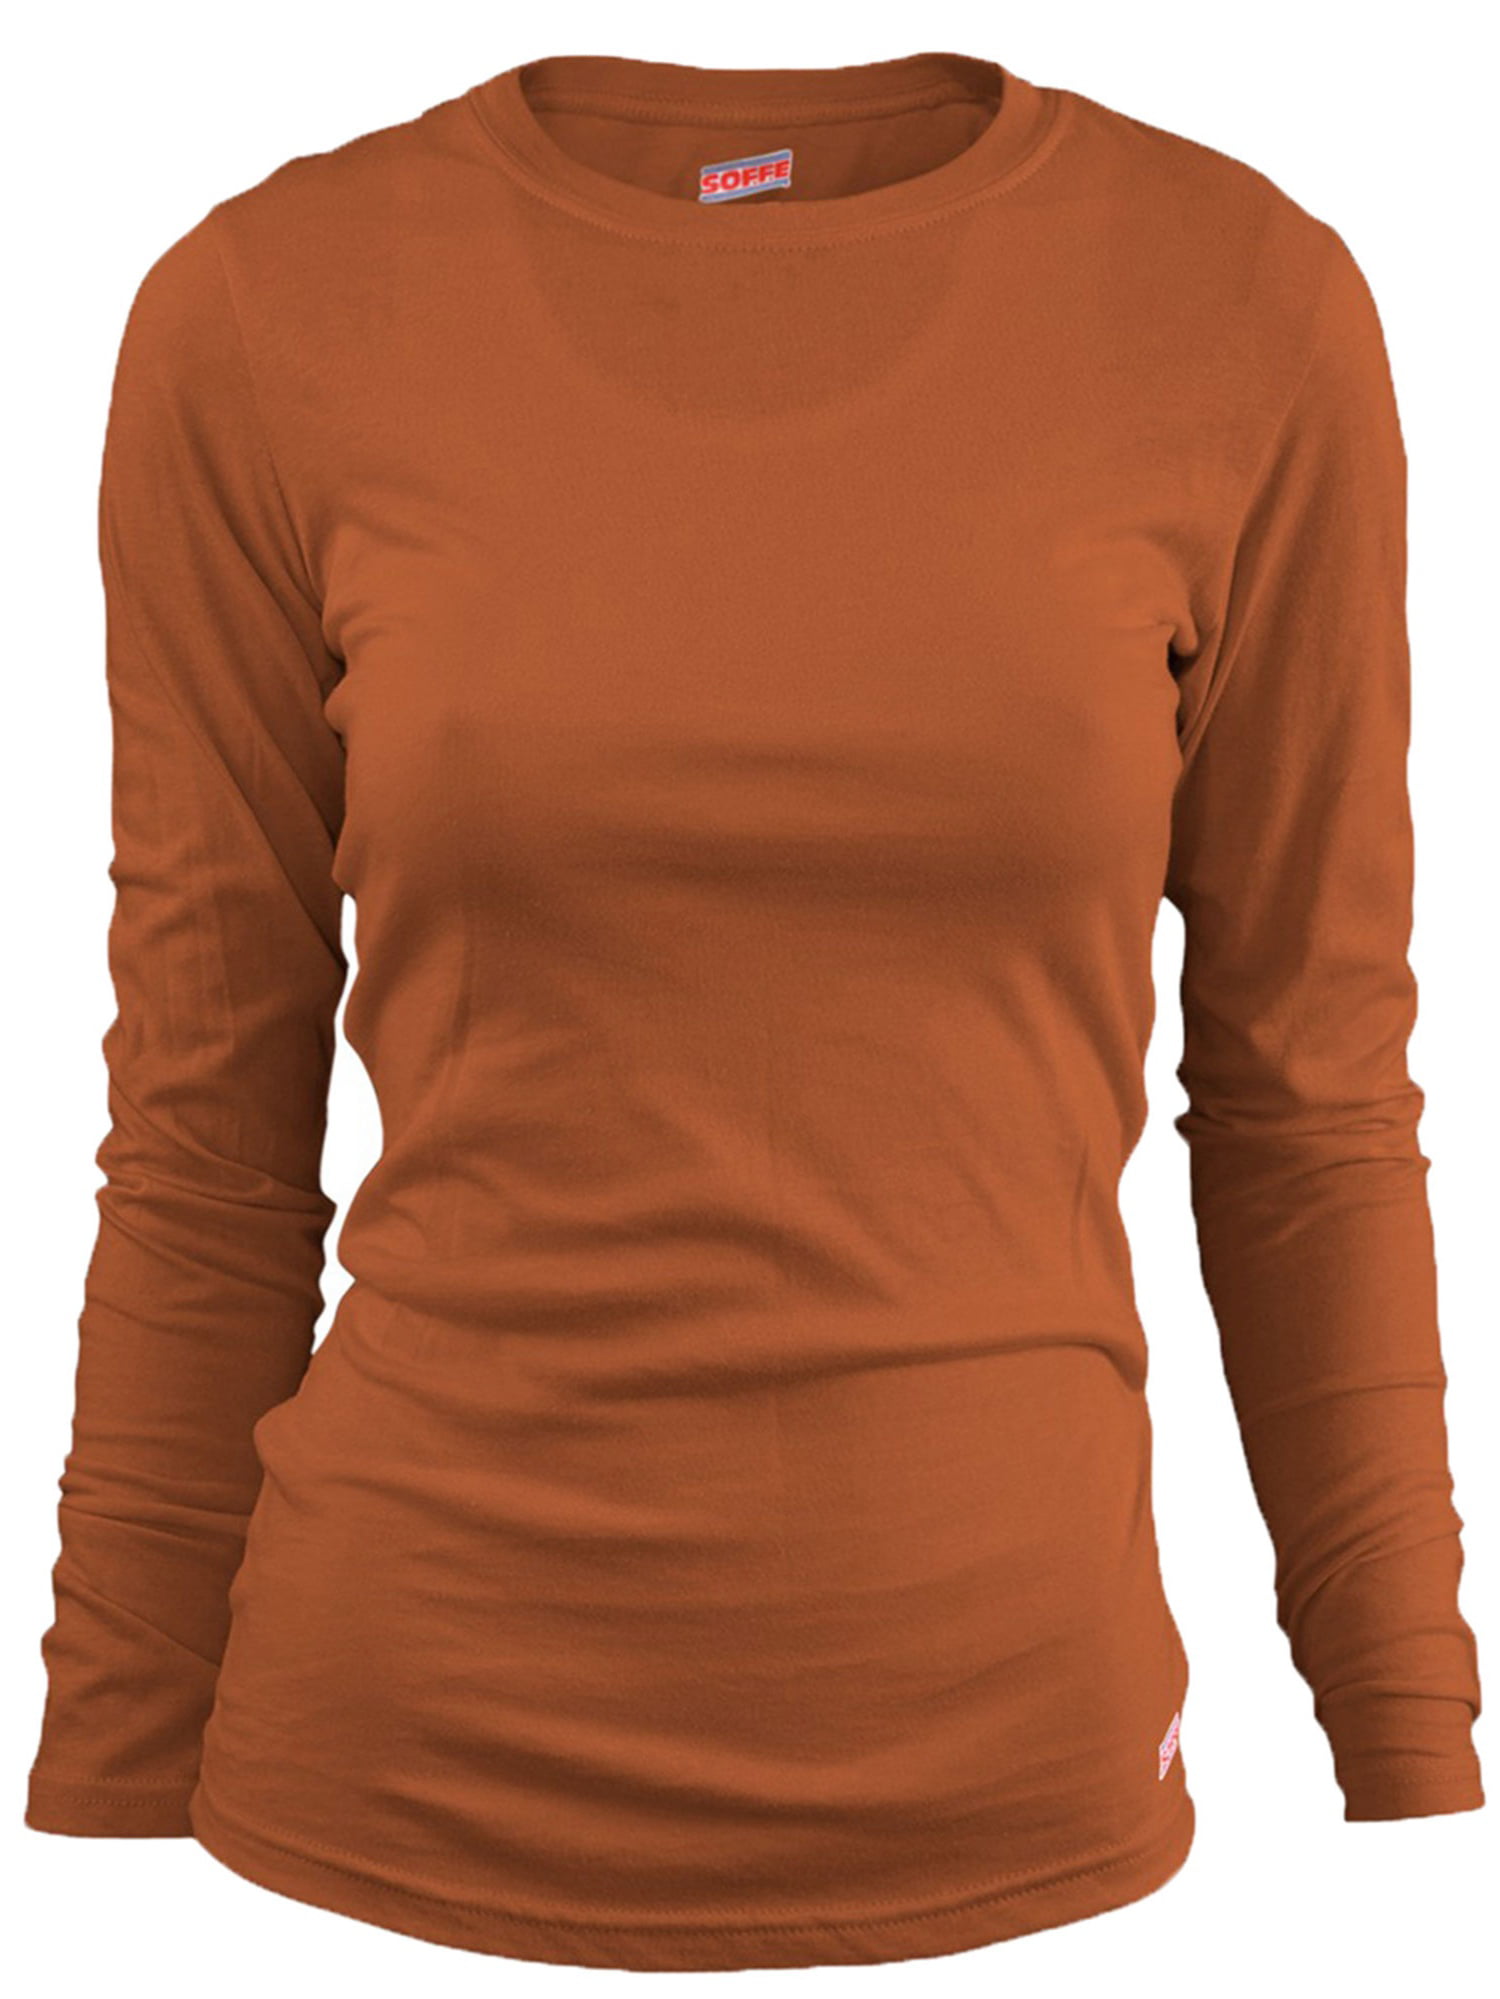 orange long sleeve t shirt women's